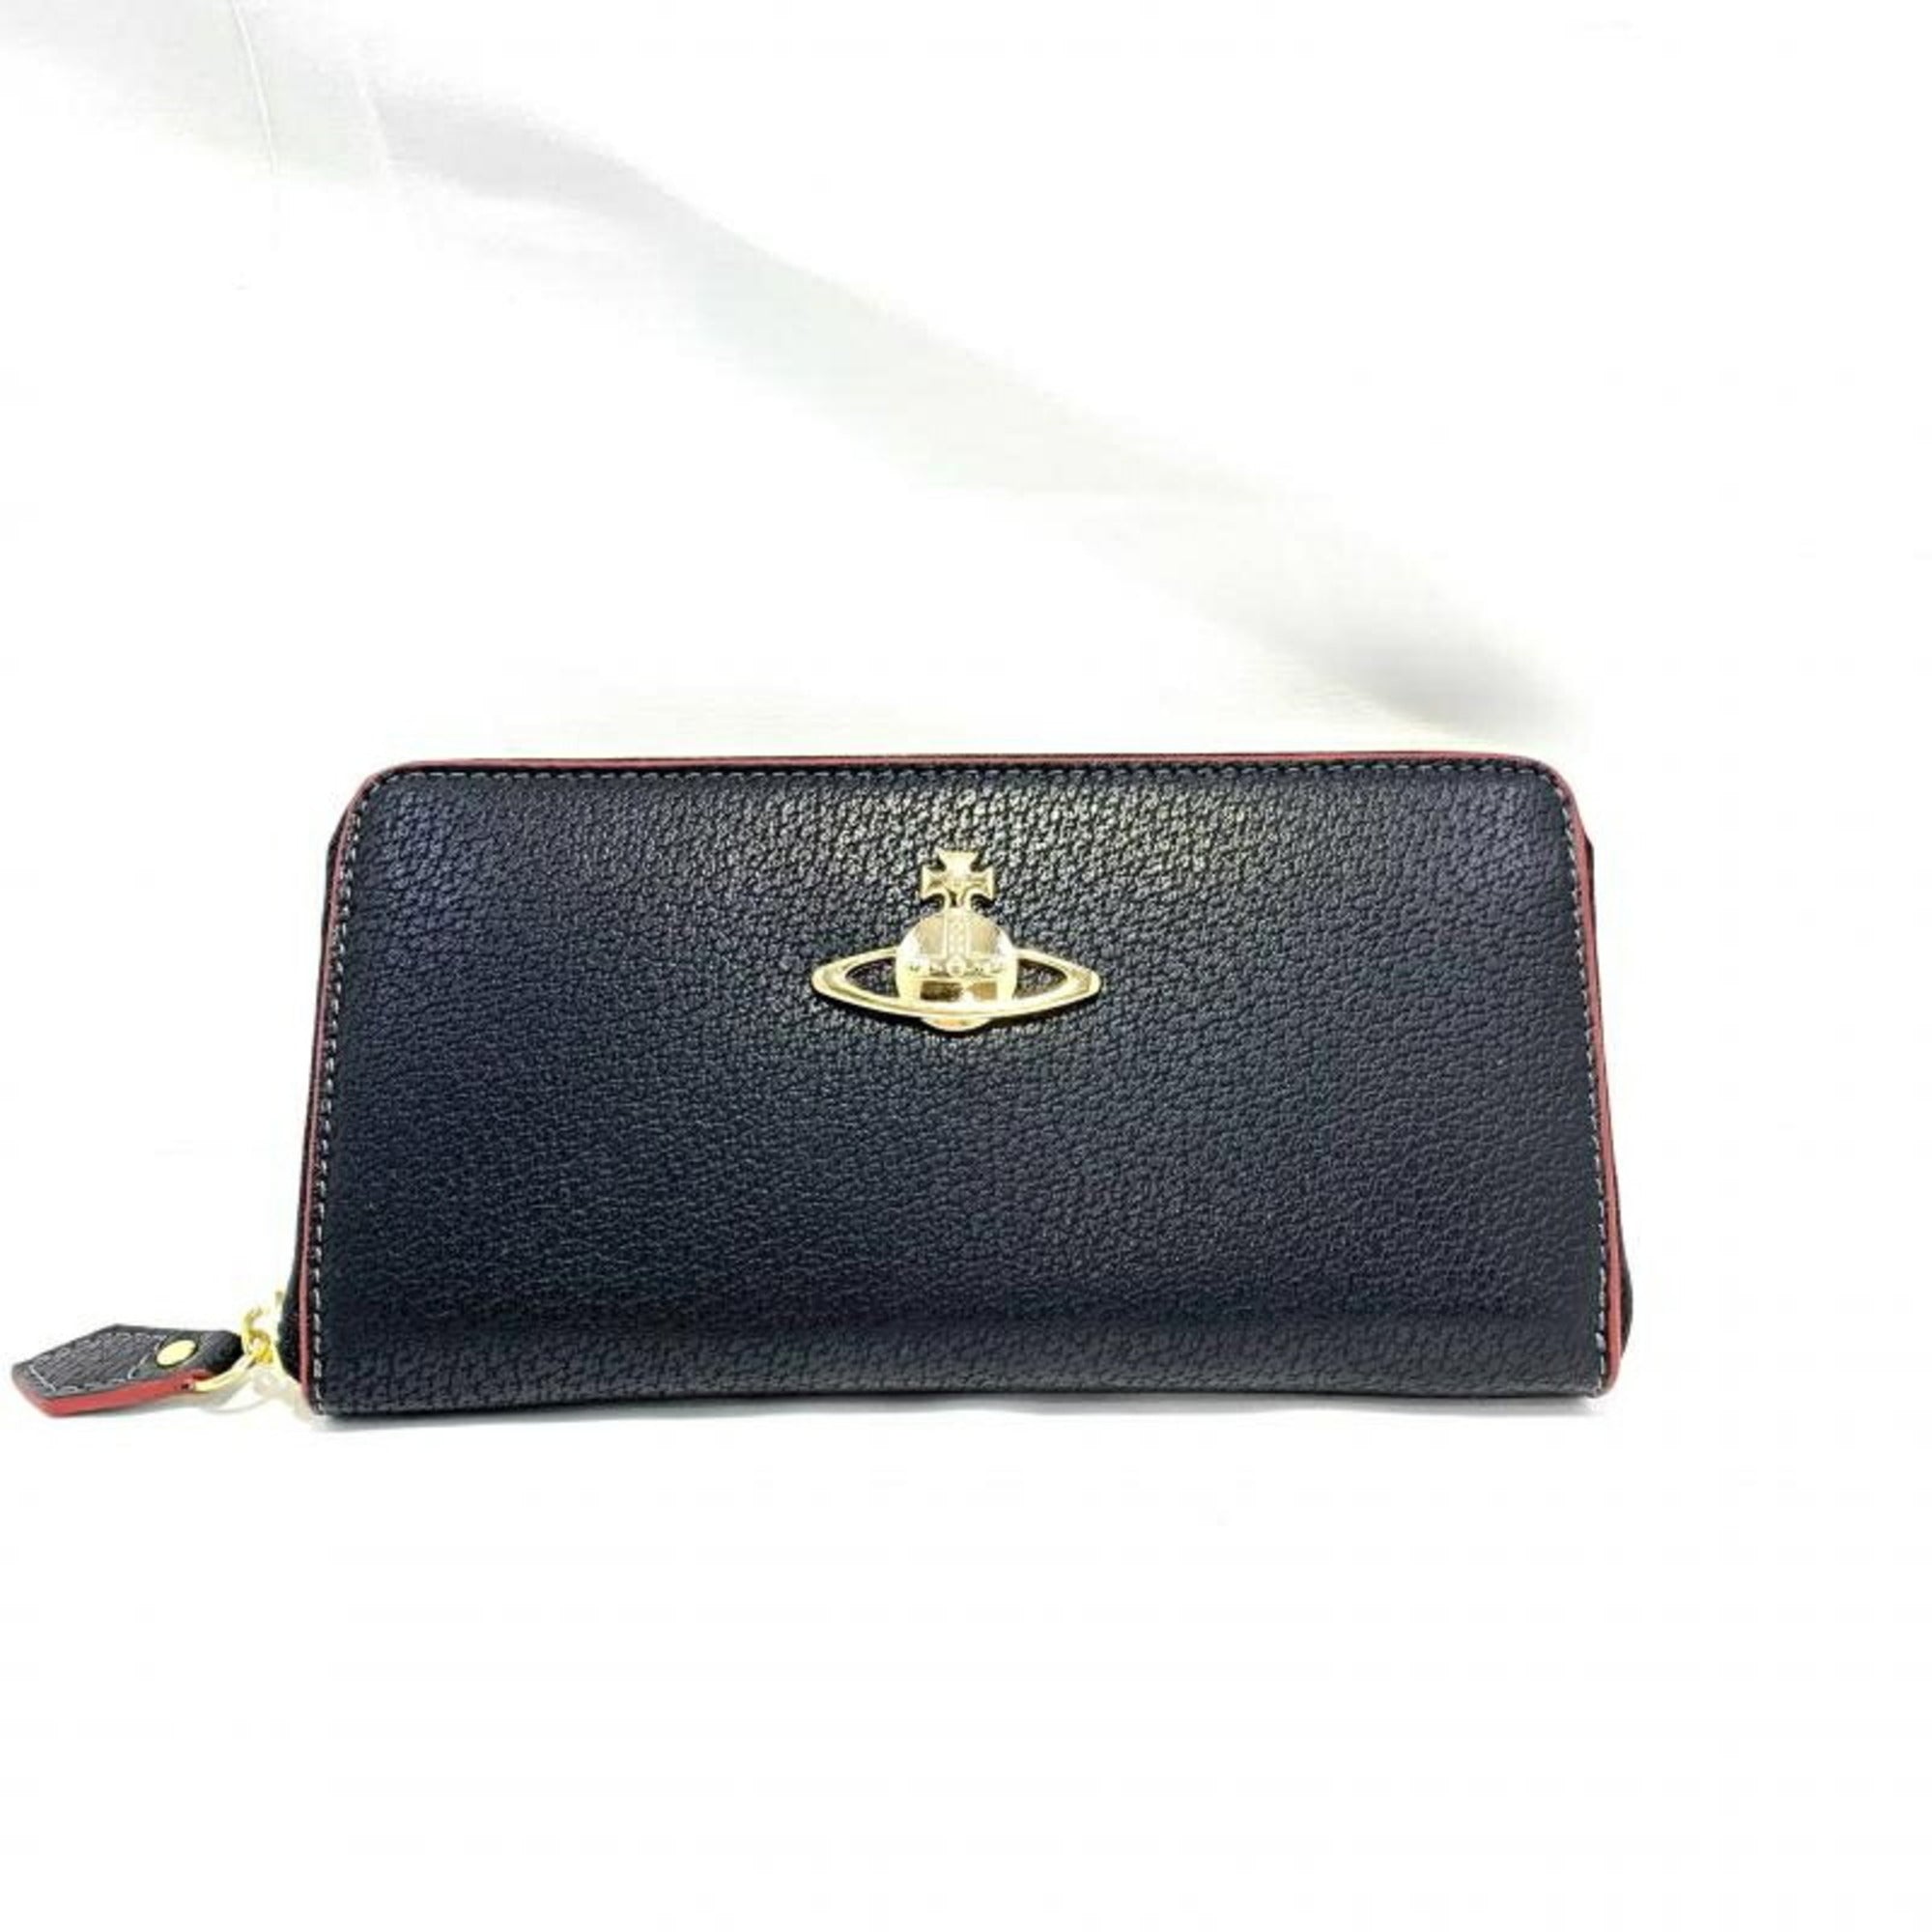 Buy Vivienne Westwood / Vivienne Westwood Long wallet leather round zipper  black [wallet/wallet/wallet/coin] [used] from Japan - Buy authentic Plus  exclusive items from Japan | ZenPlus